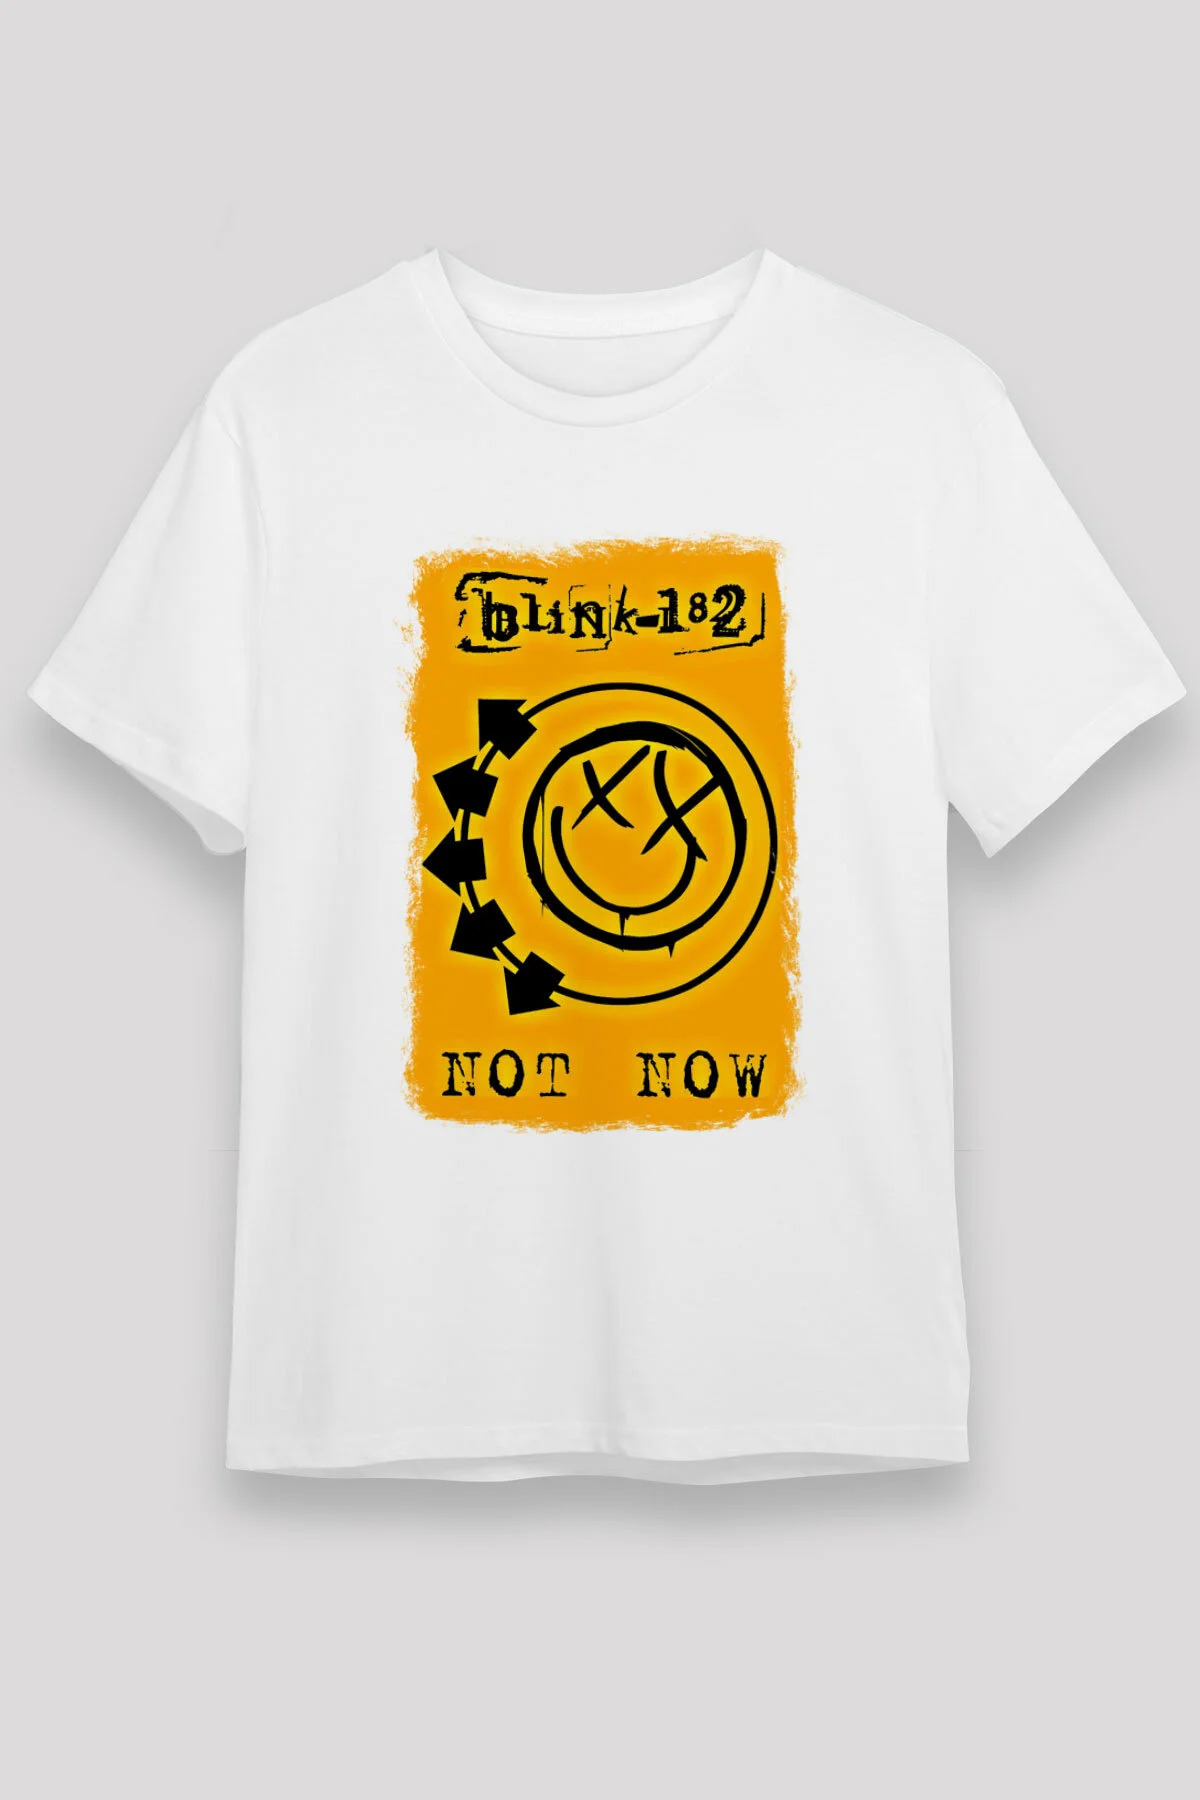 Blink 182 , Music Band ,Unisex Tshirt 15/